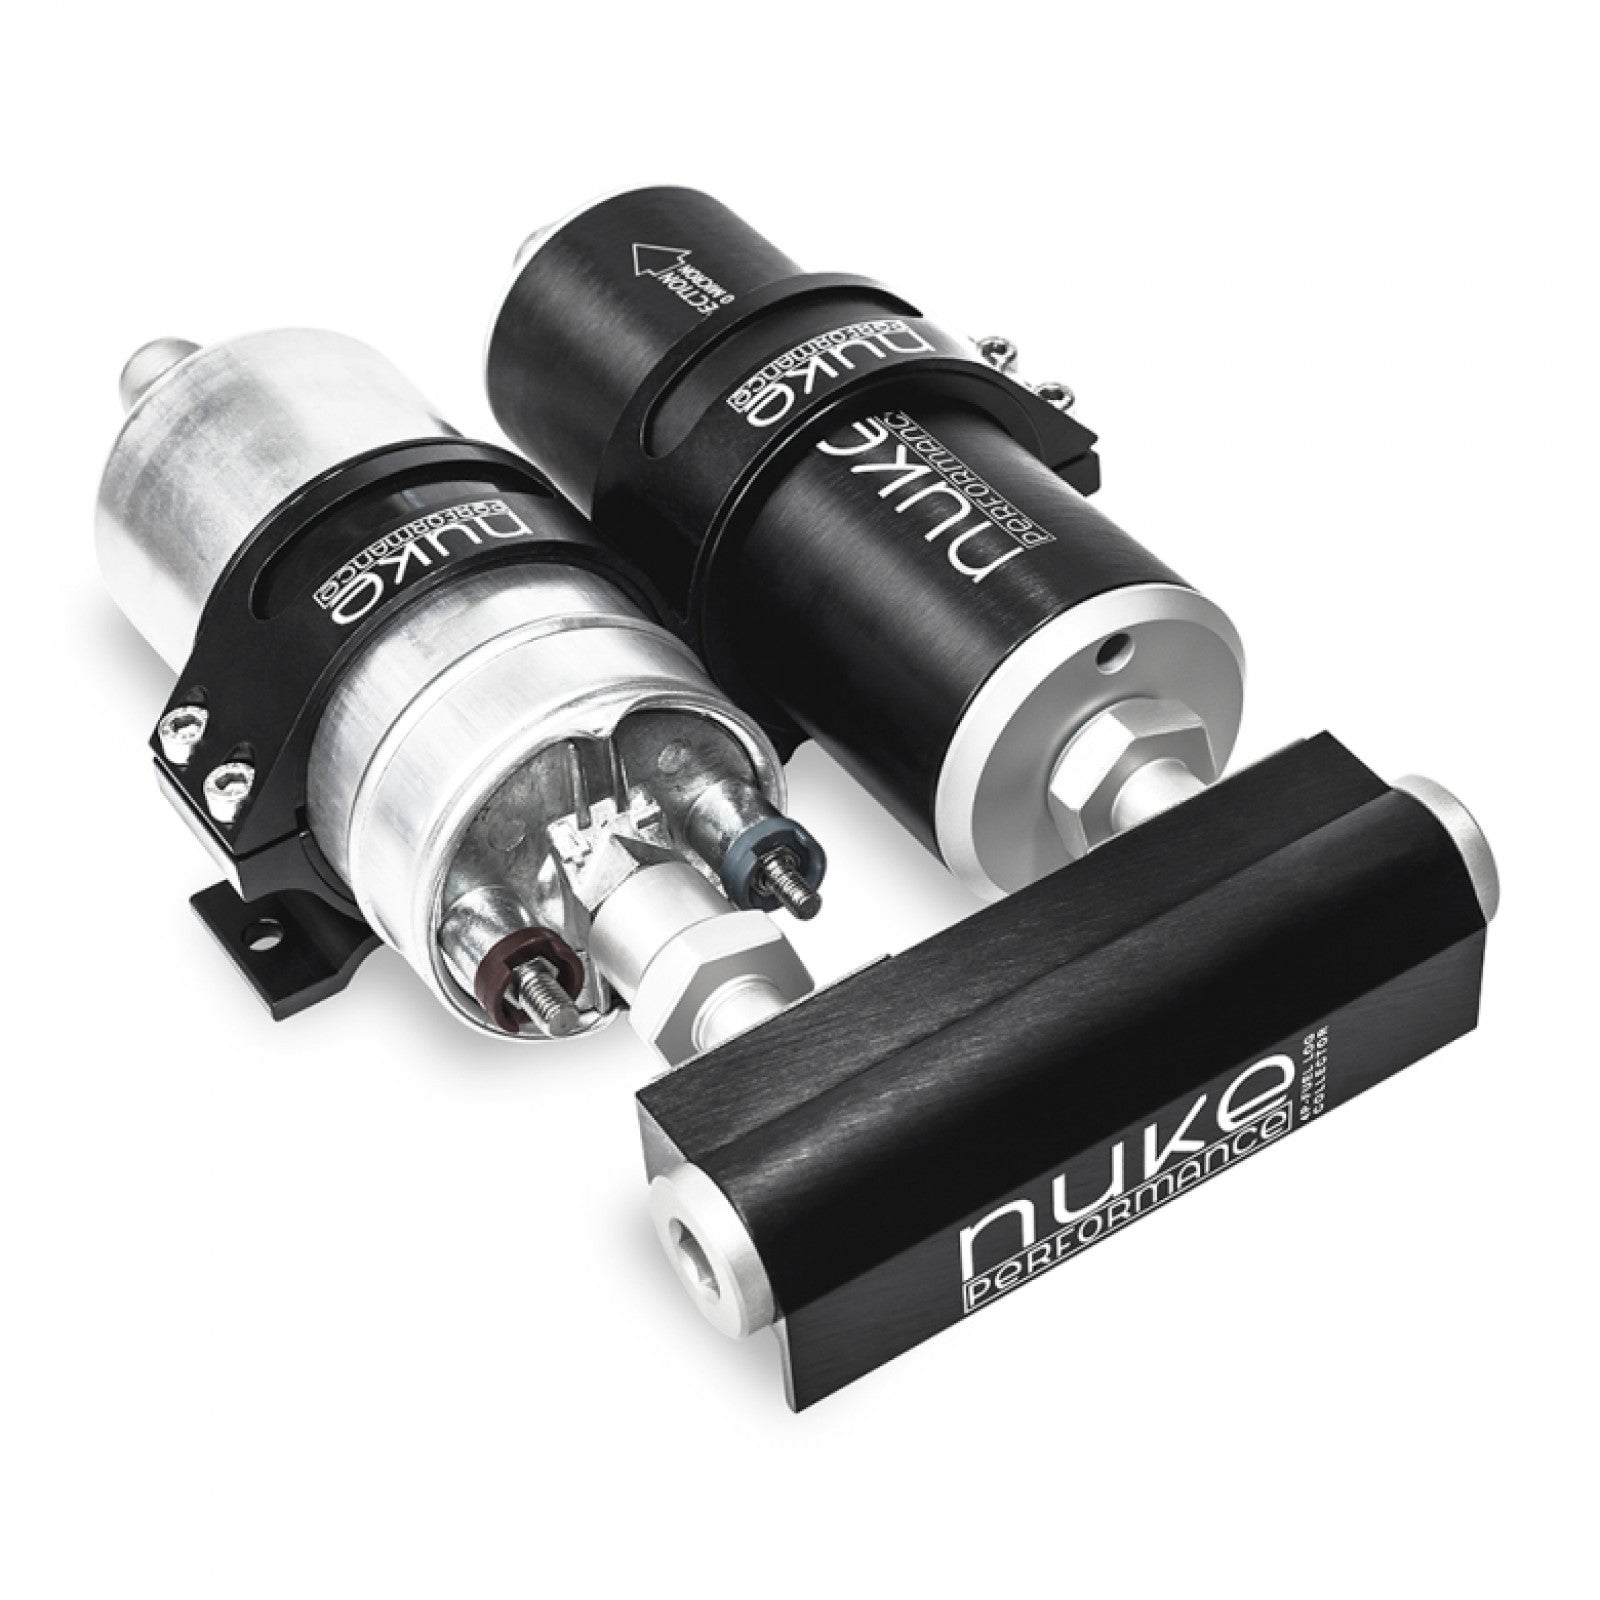 Nuke Performance 4-Port Fuel Log Collector for Walbro GSL392 Fuel Pump and Nuke Fuel Filter Slim